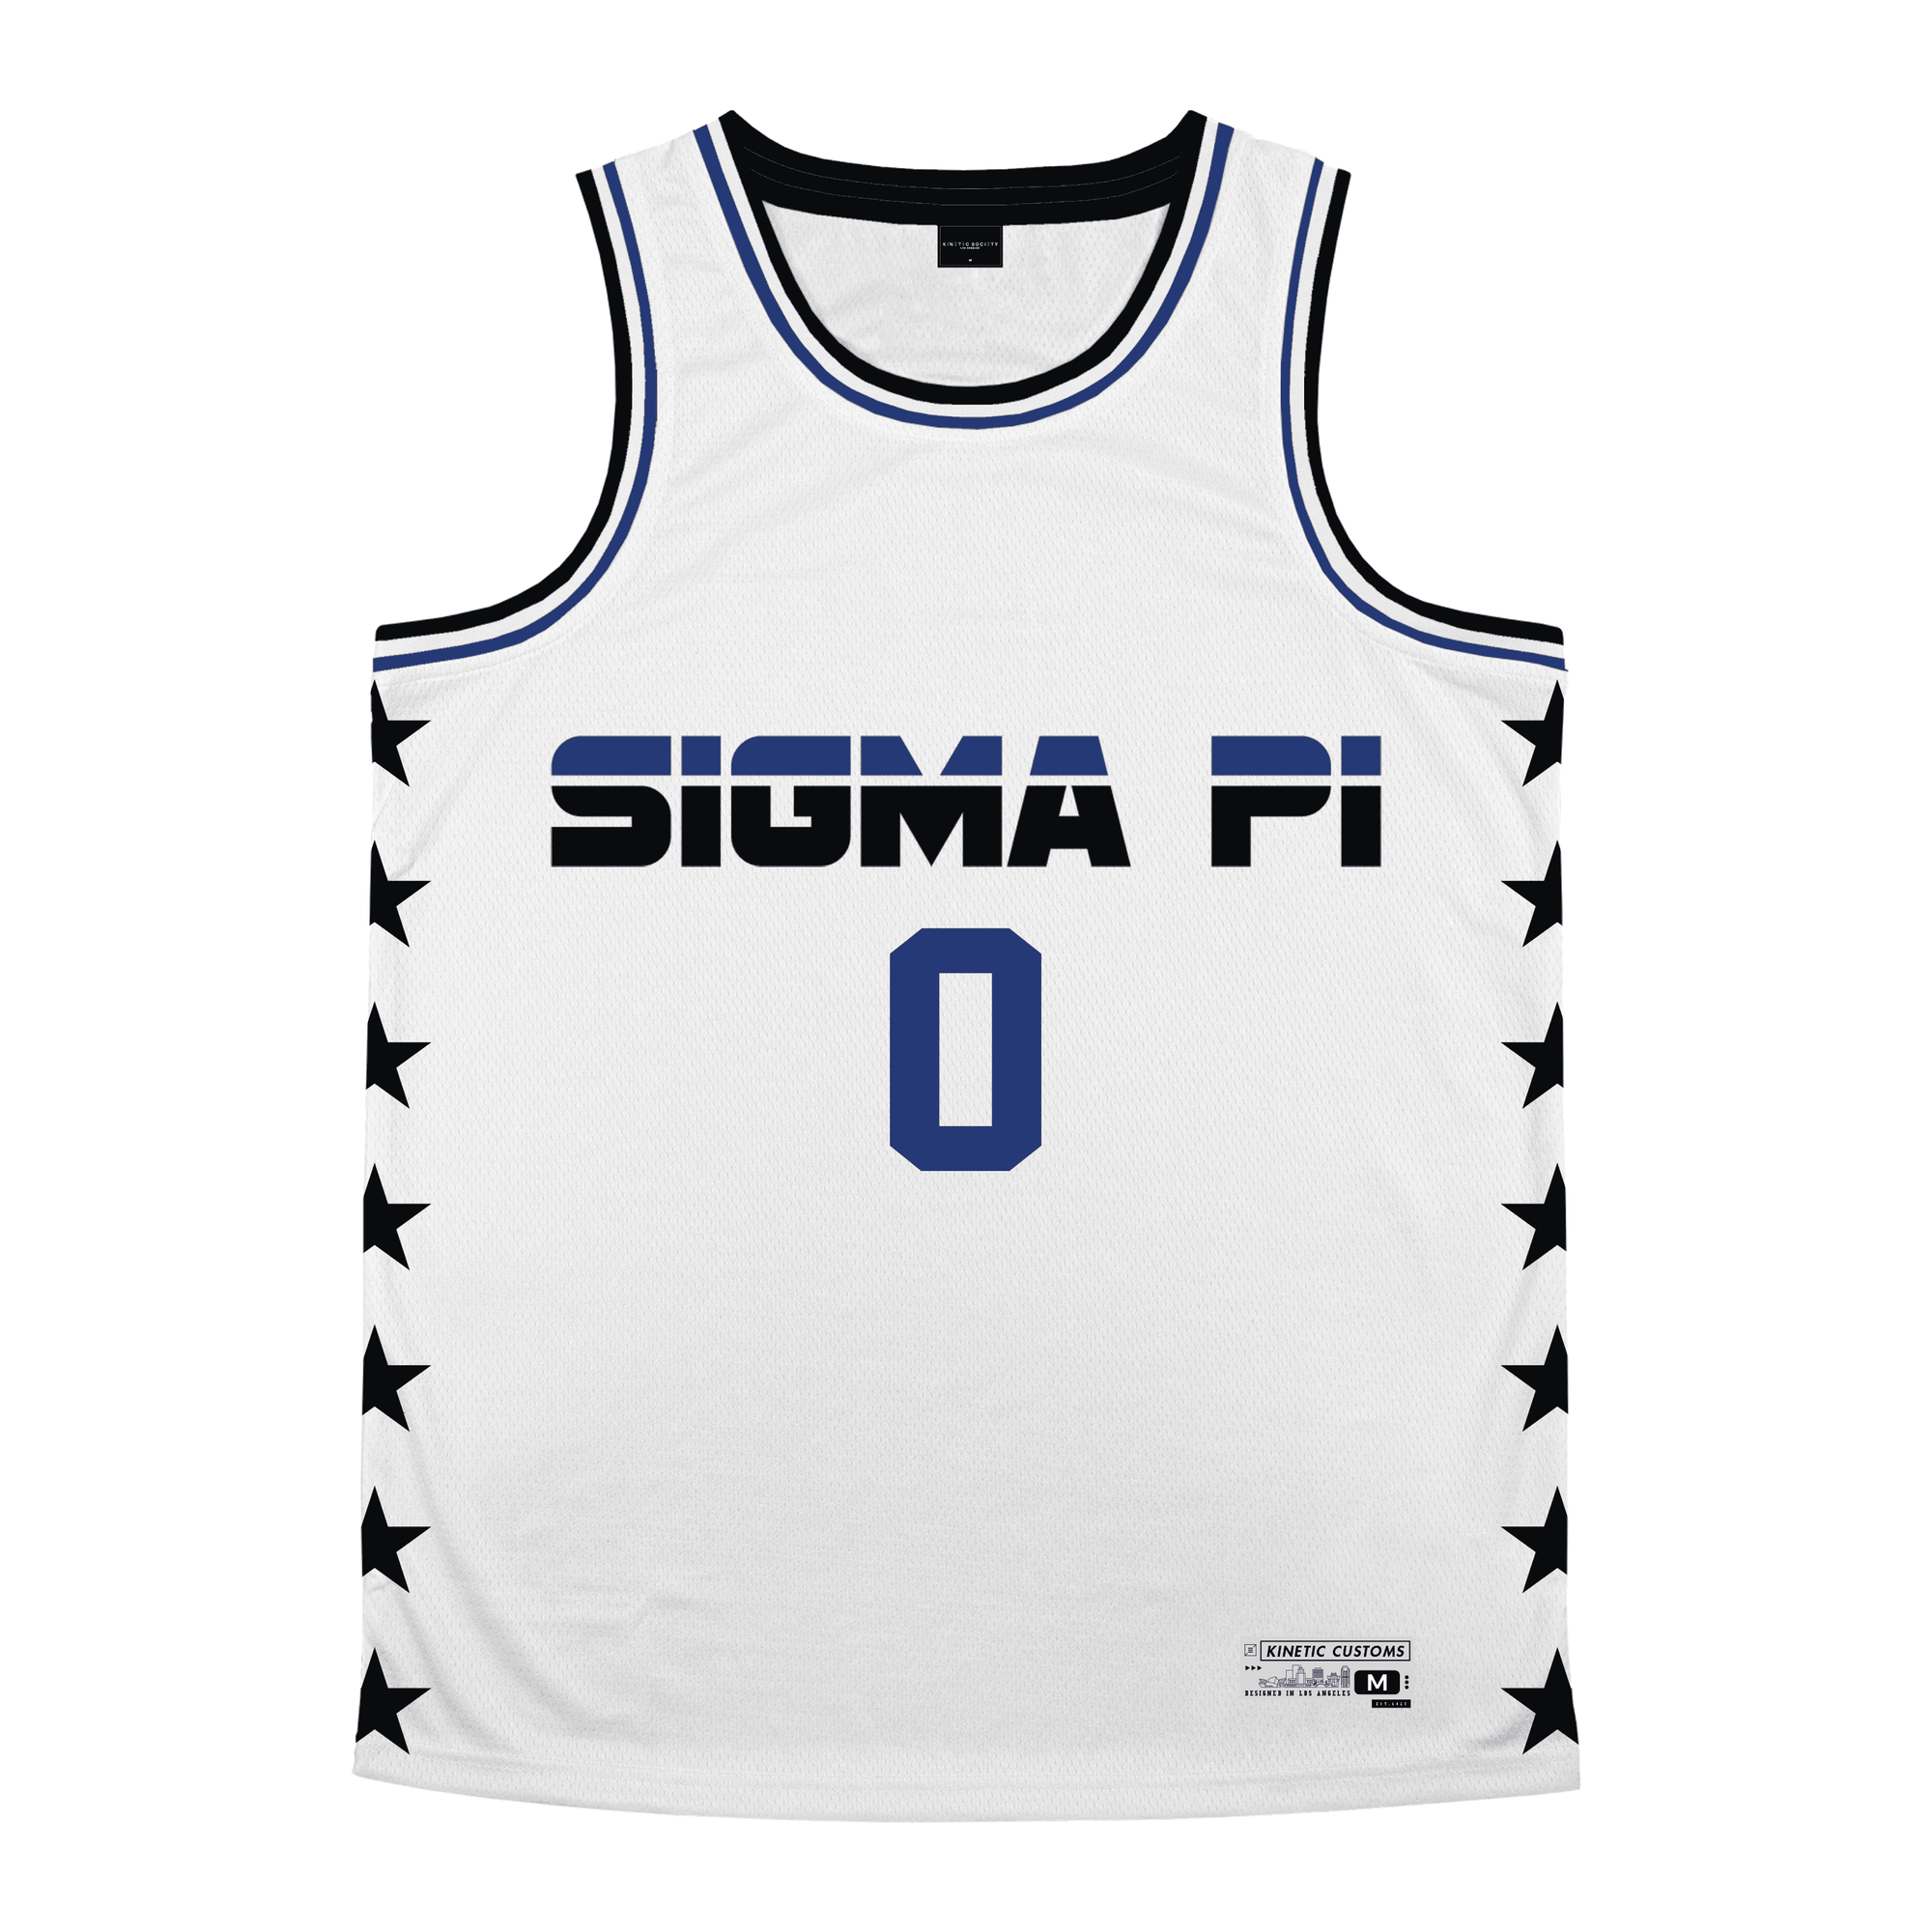 Sigma Pi - Black Star Basketball Jersey